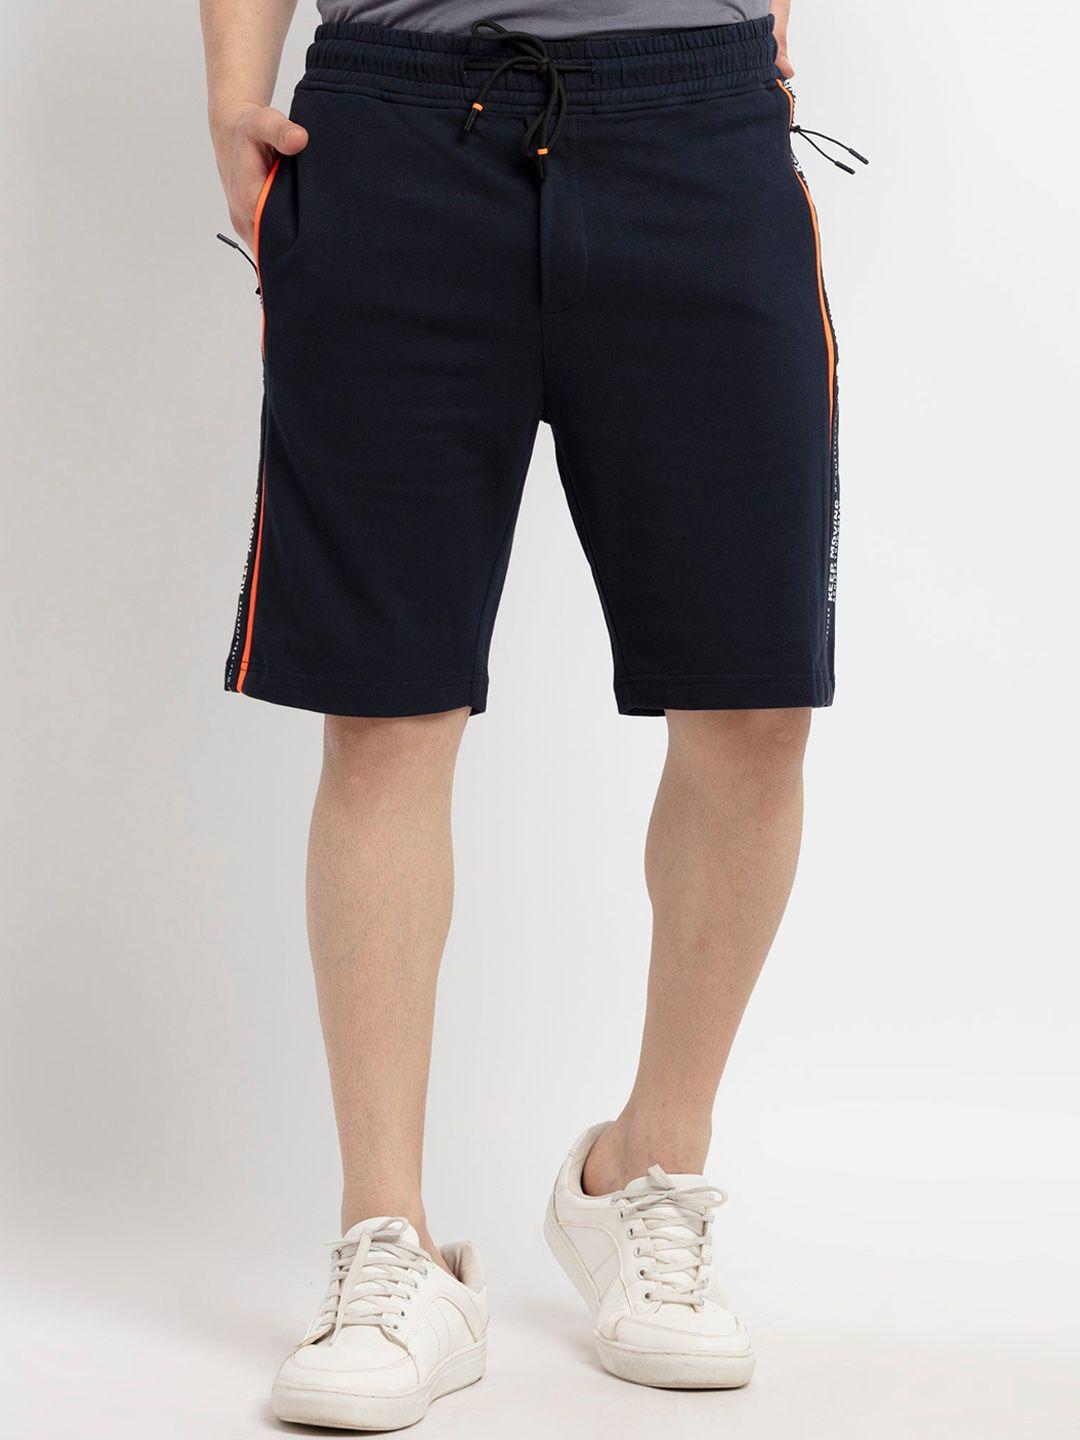 status quo men navy blue solid shorts